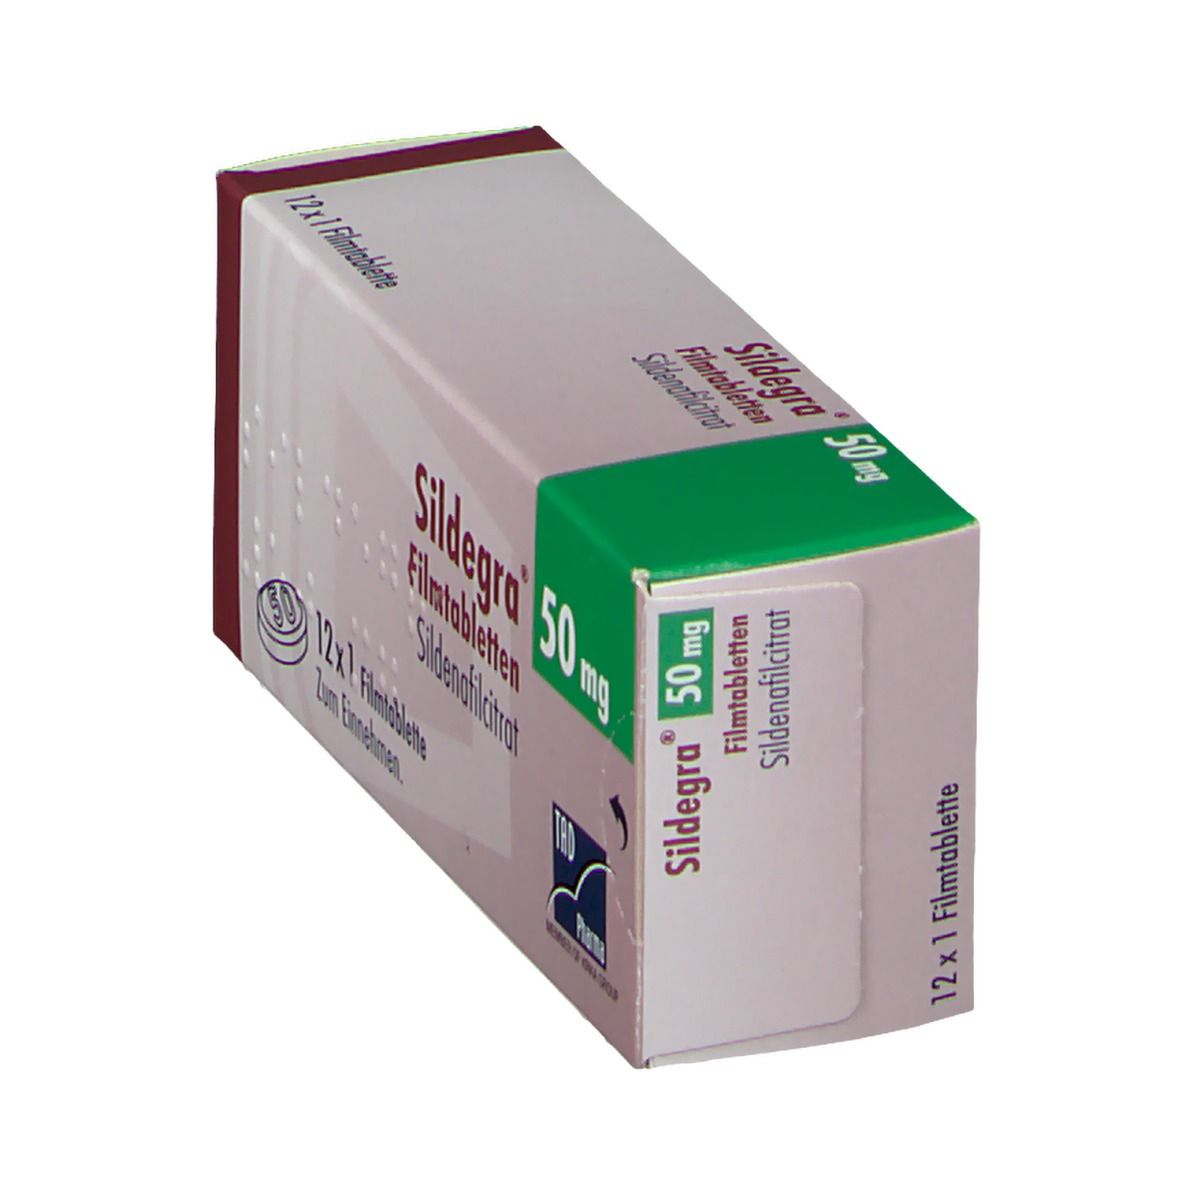 Sildegra® 50 mg